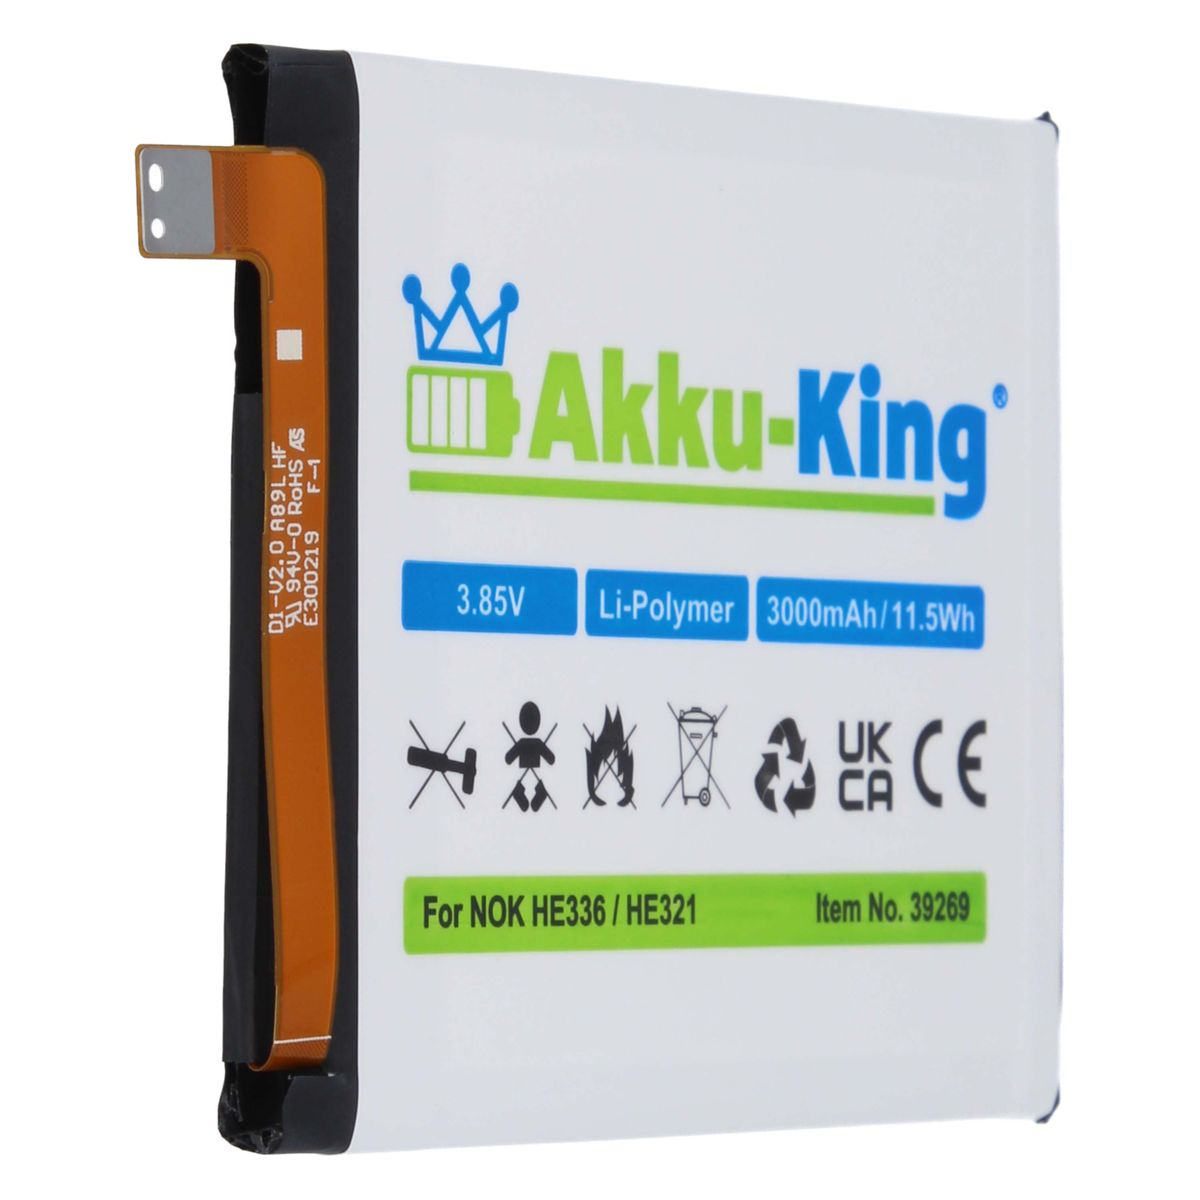 AKKU-KING Akku 3000mAh mit HE321 Volt, Li-Polymer Nokia kompatibel Handy-Akku, 3.85